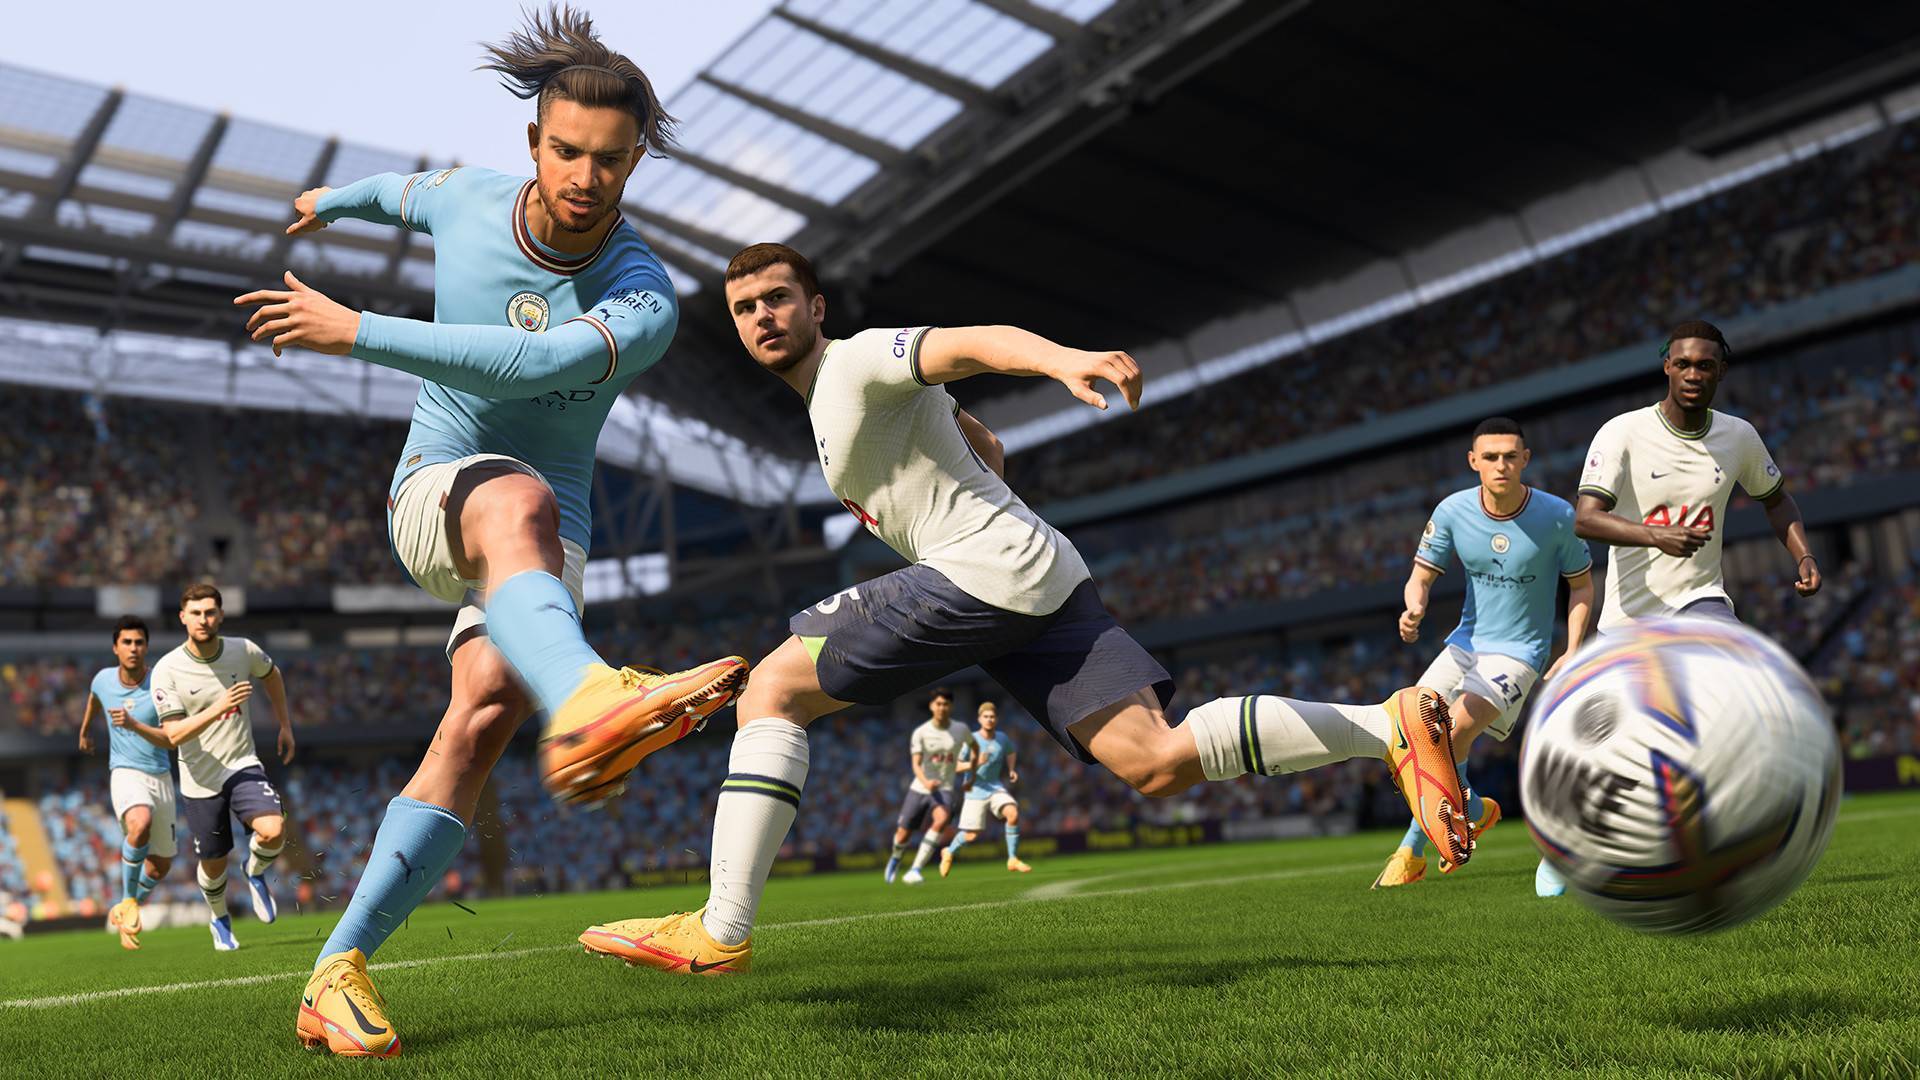  FIFA 23 - Playstation 4 / PS4 (Brand NEW Sealed) - FREE SHIPPING